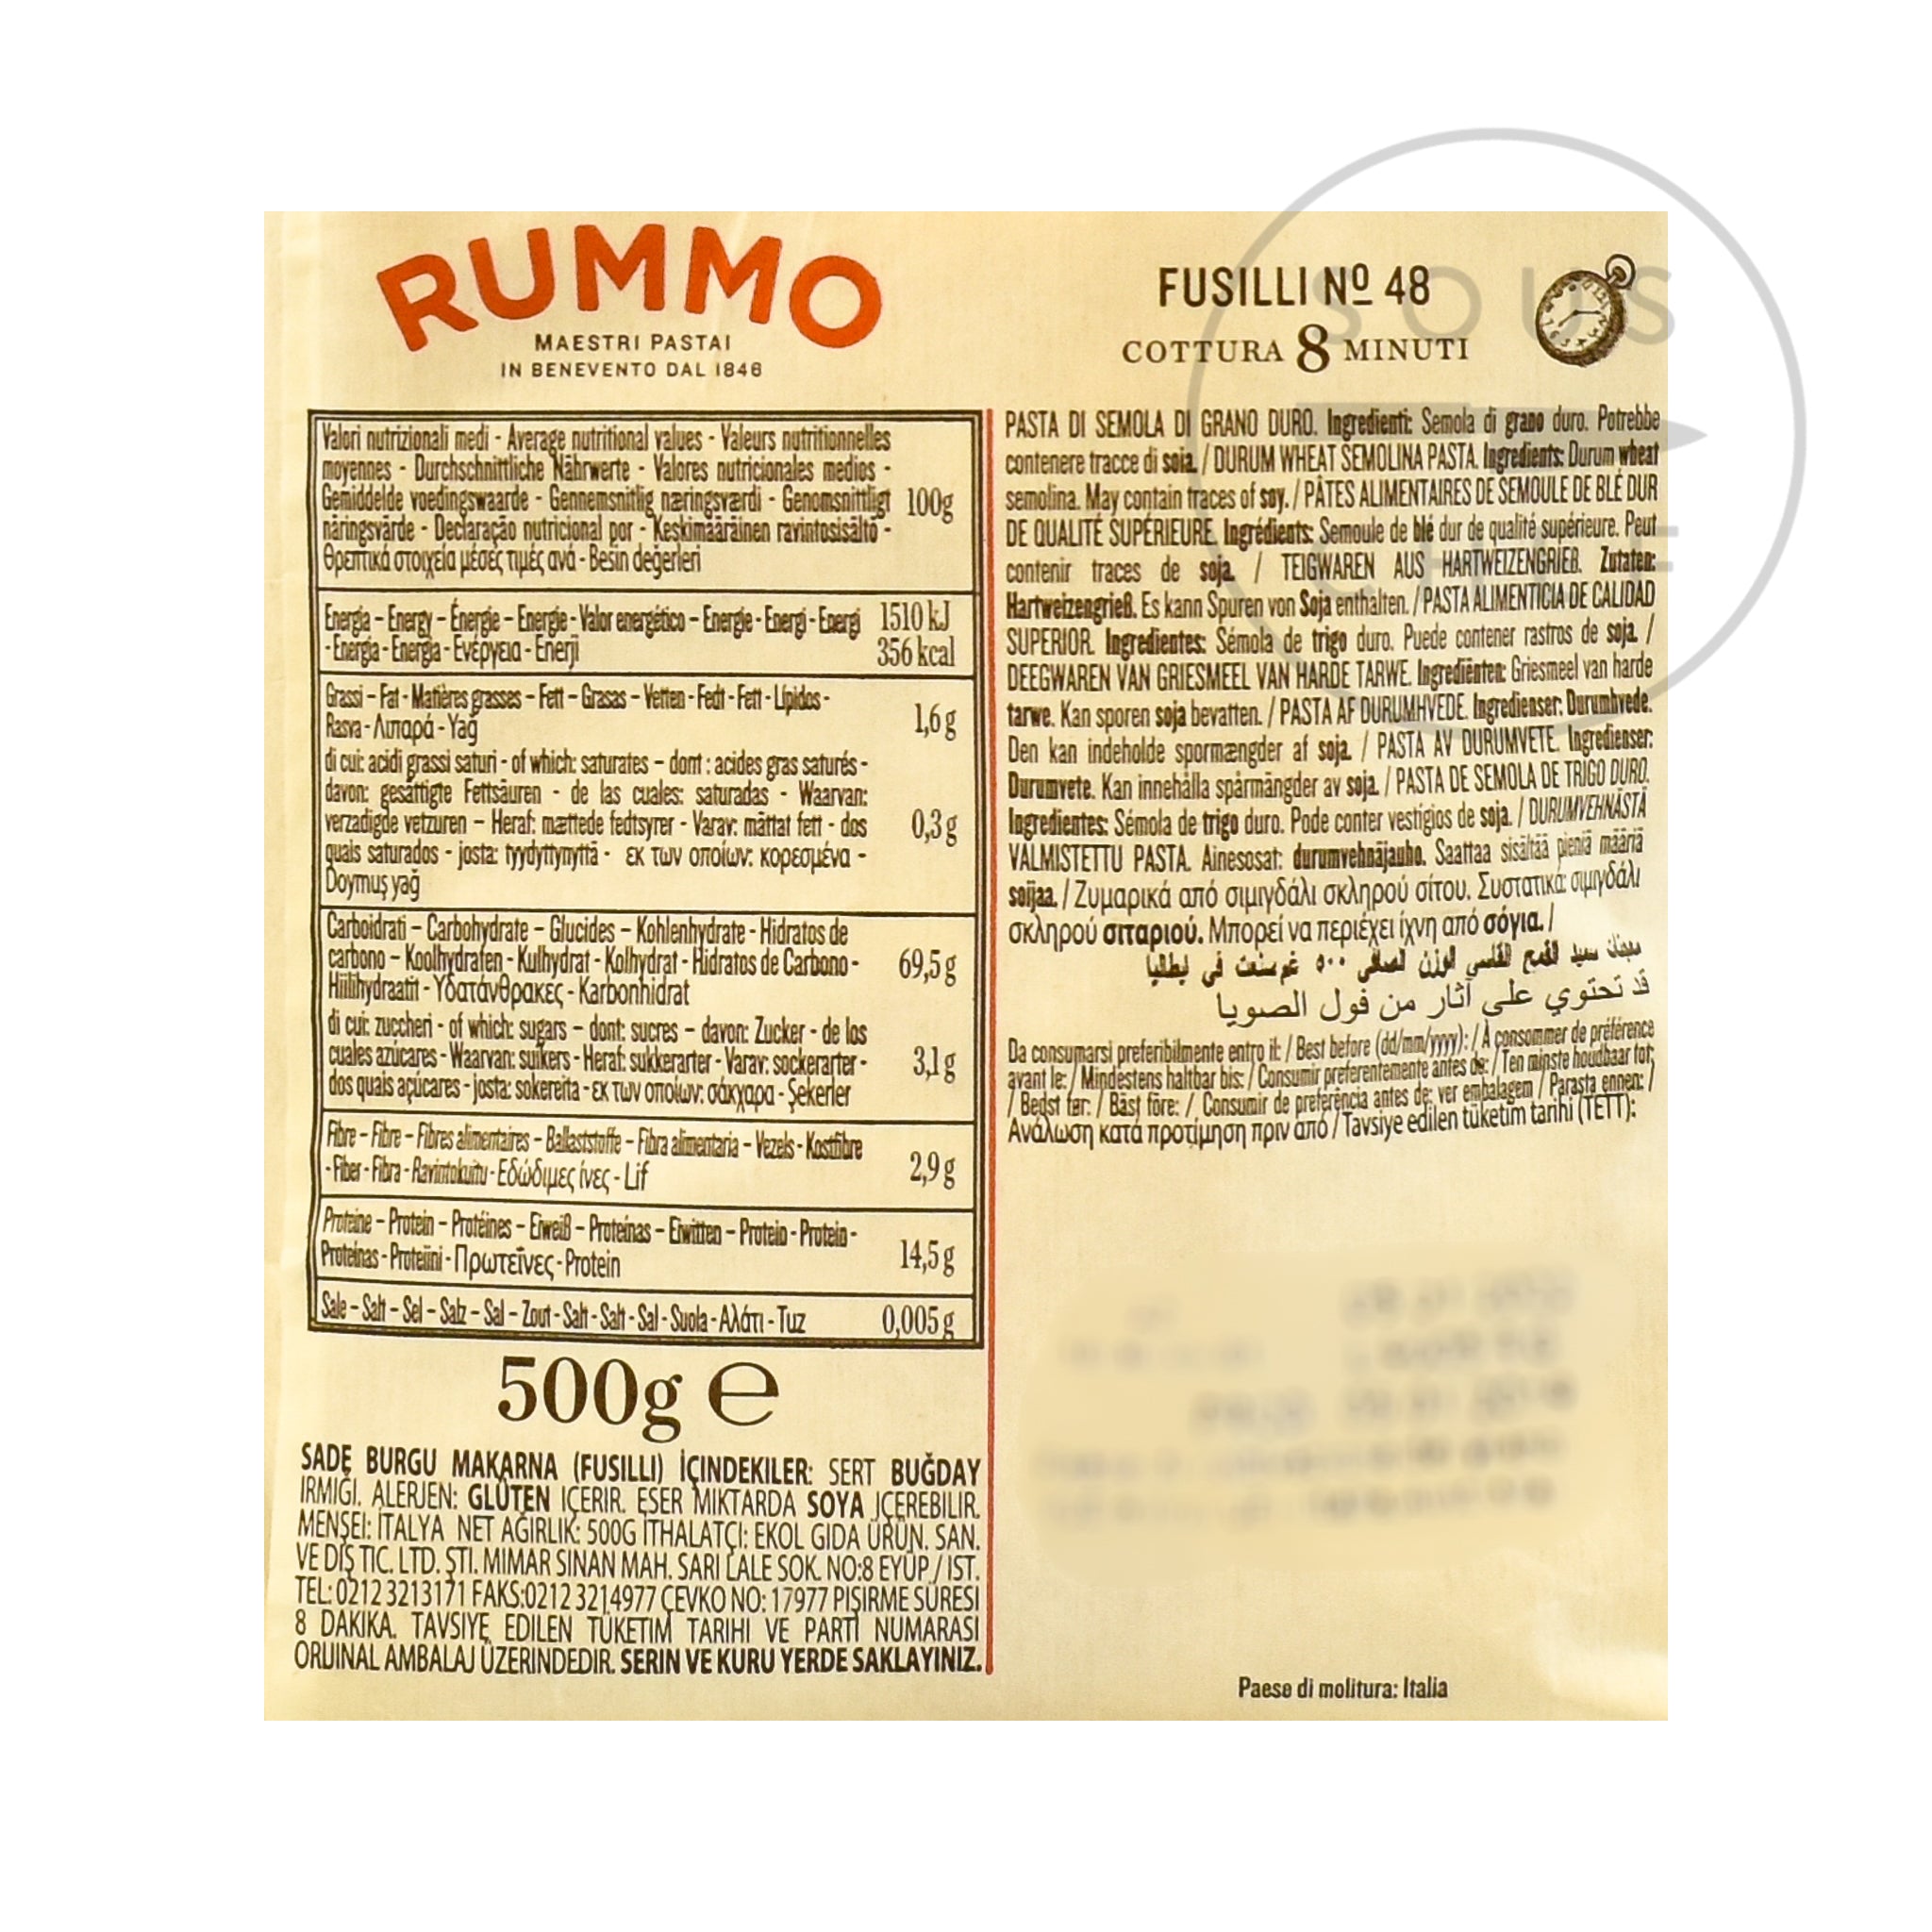 Rummo Fusilli 500g nutritional information ingredients